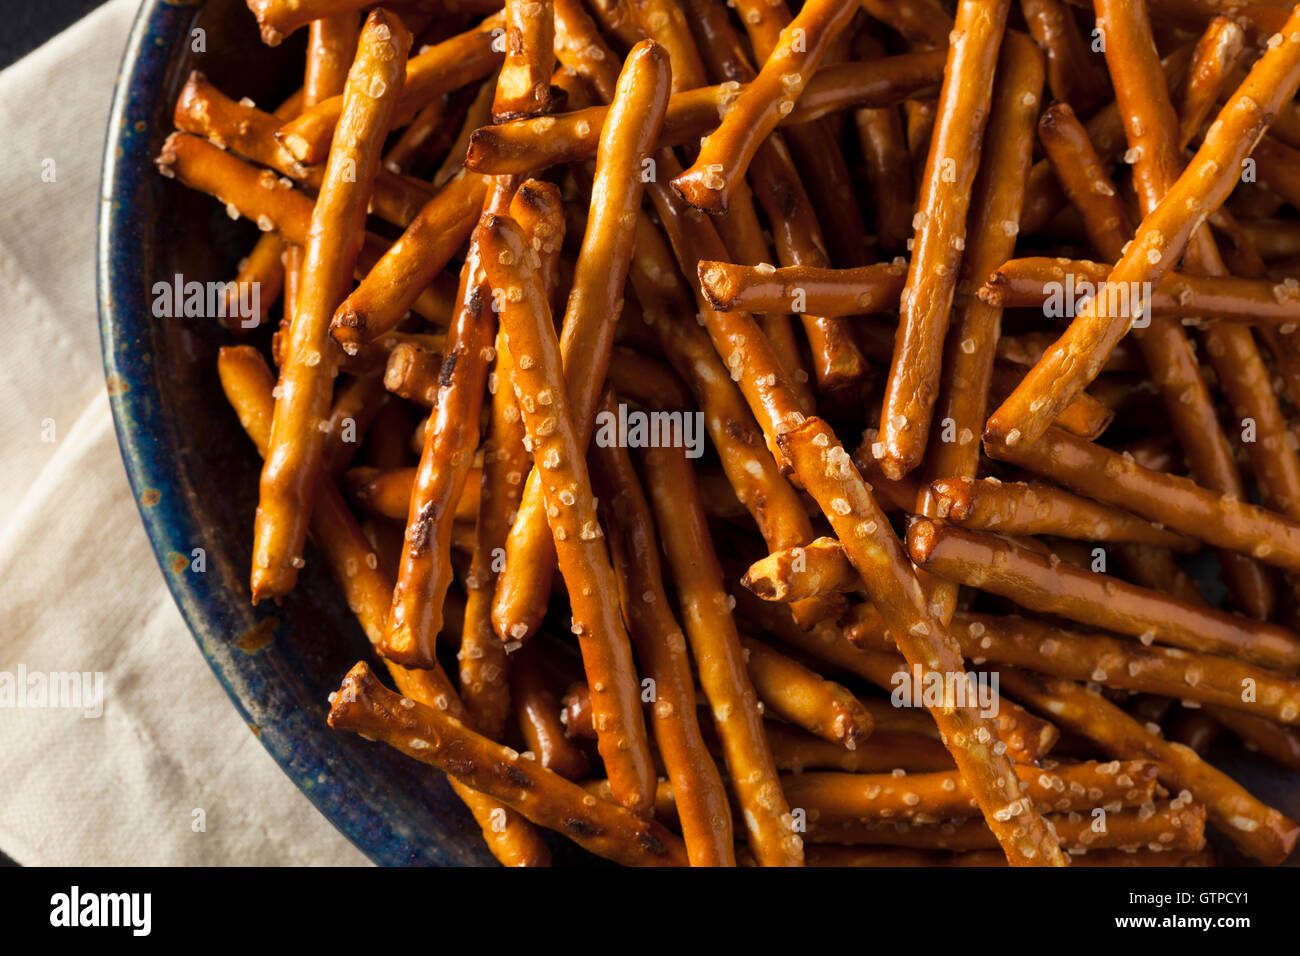 Healthy Salty Baked Pretzel Sticks Ready to Eat Stock Photo